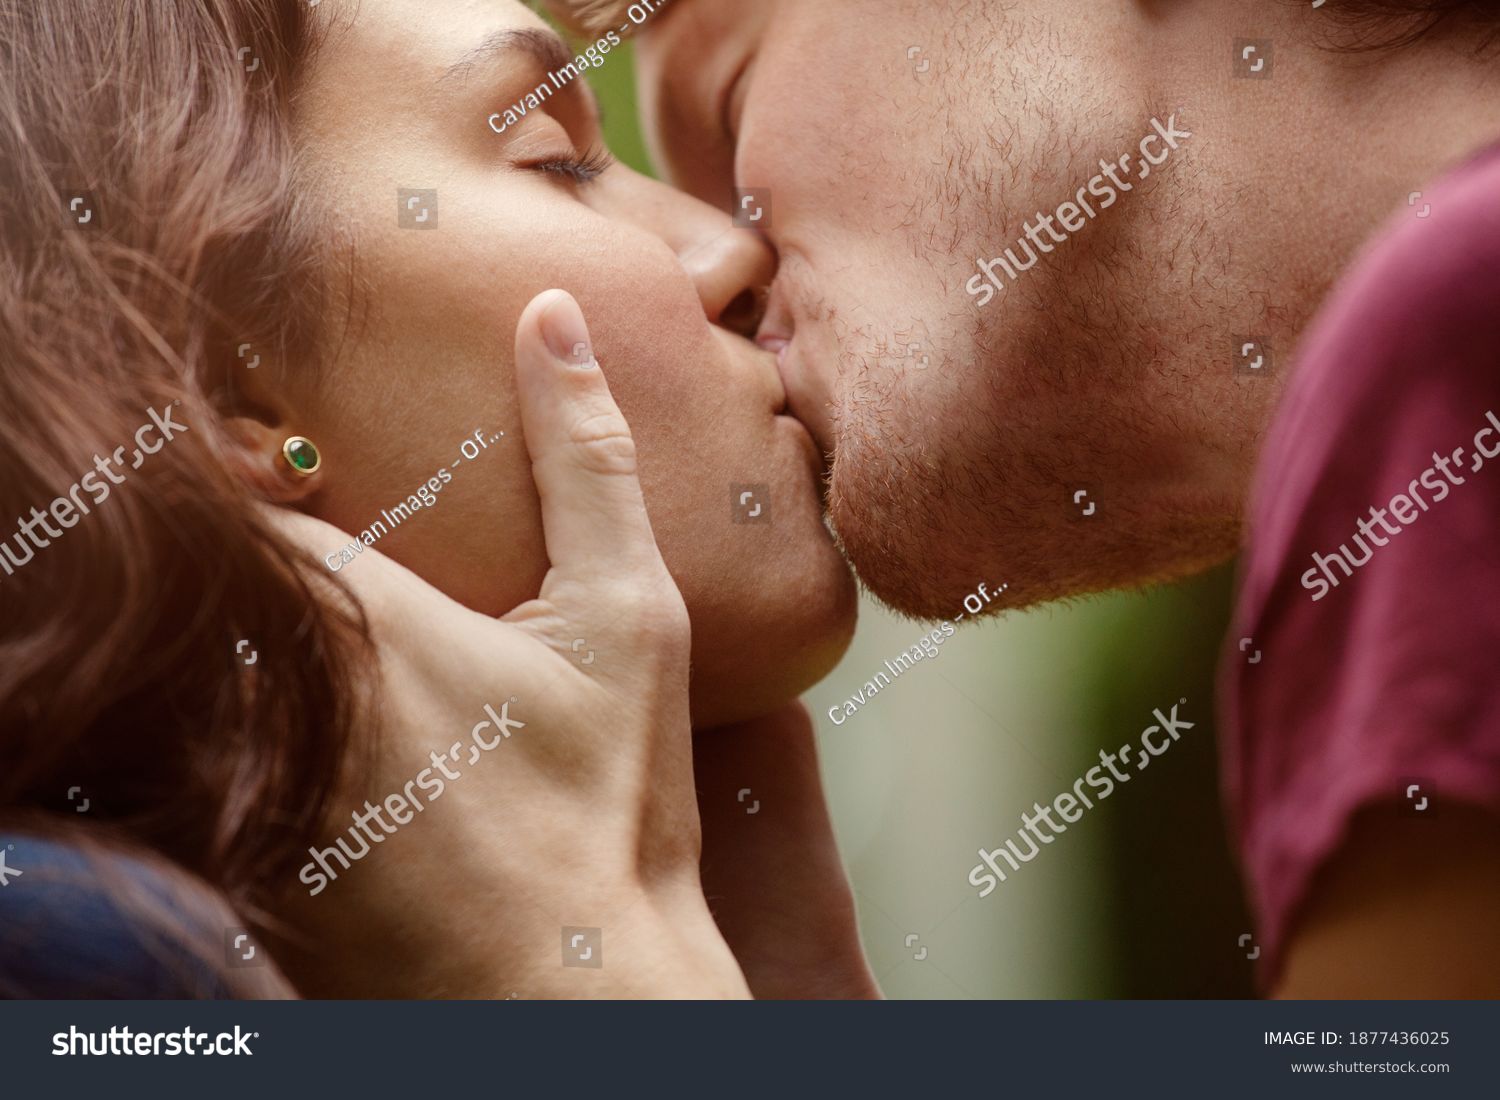 arijit deb share sexy couples making love photos